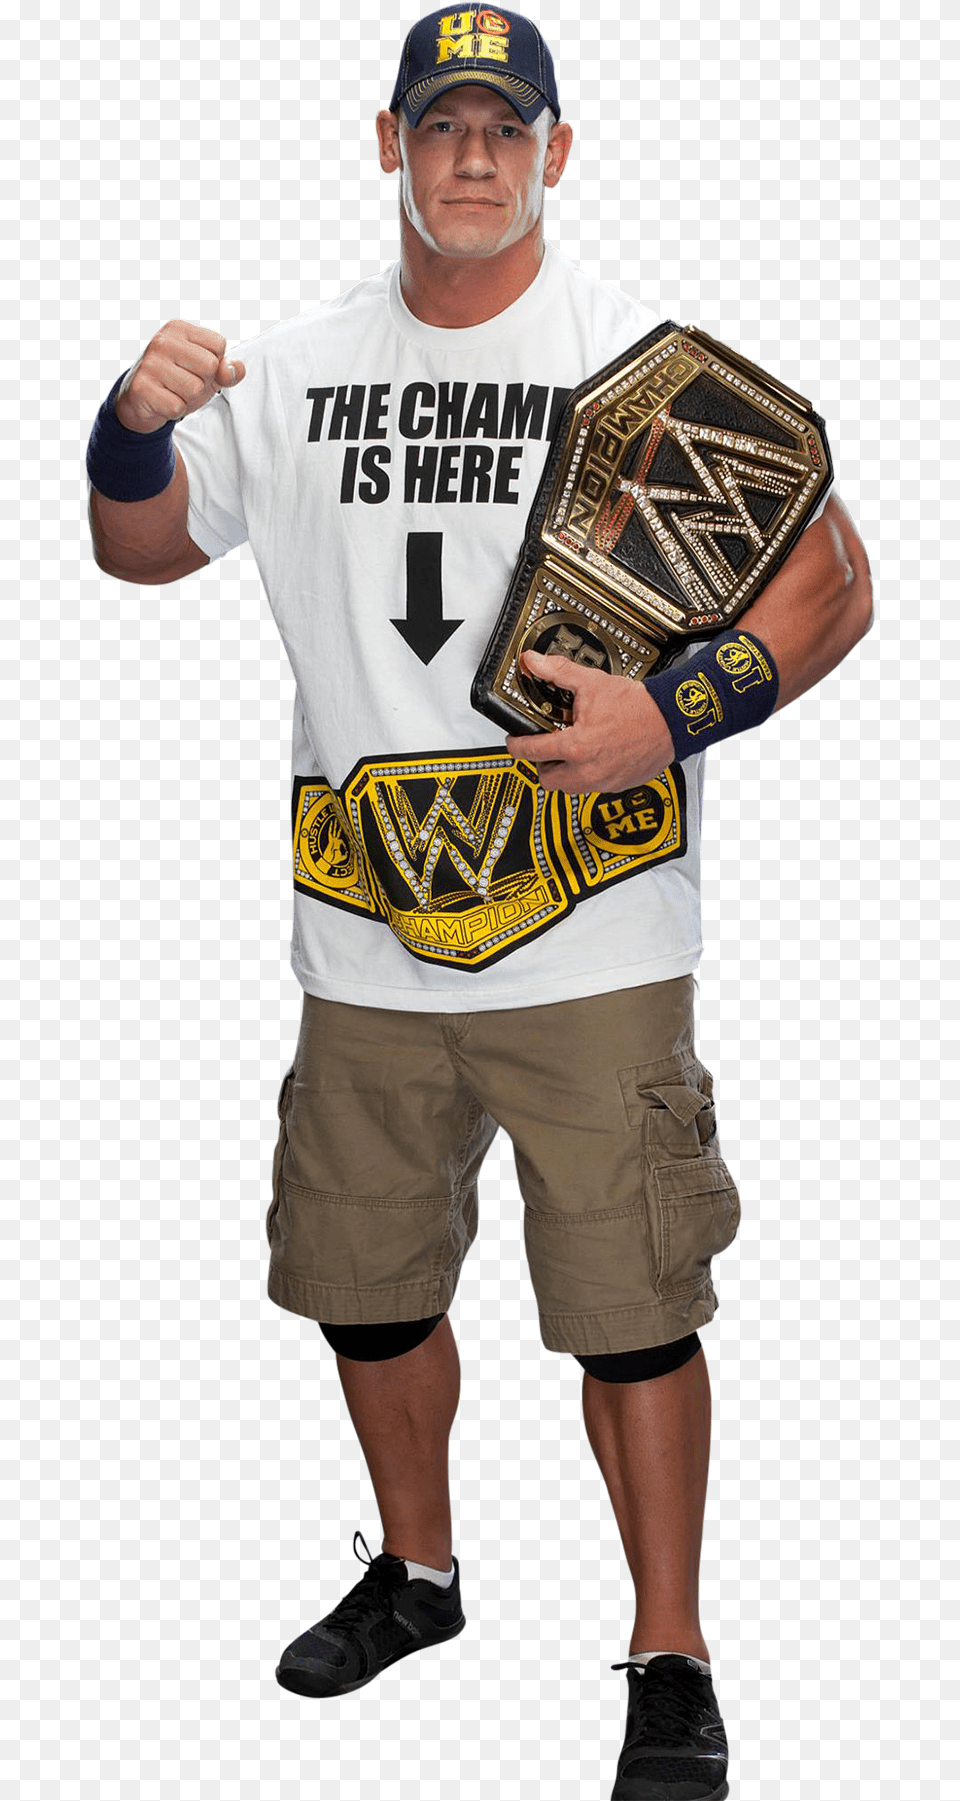 John Cena Google Search John Cena Wwe Champion Wwe John Cena Wwe Champion, Hat, T-shirt, Shorts, Clothing Free Transparent Png